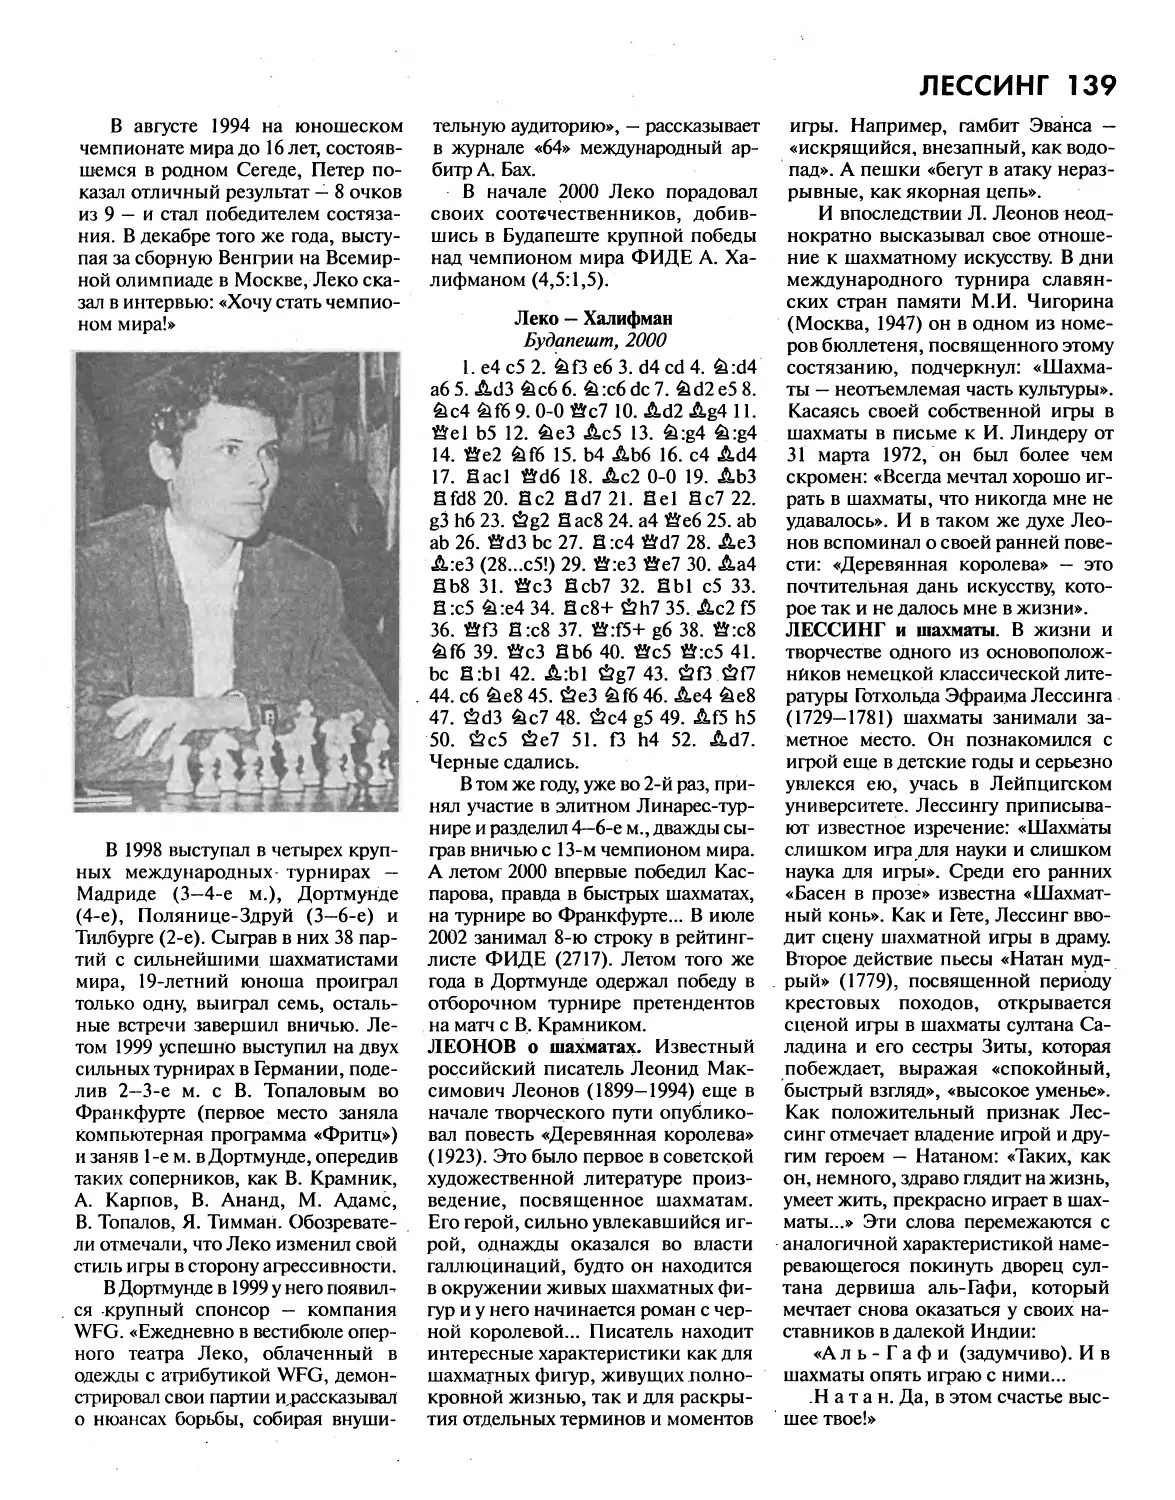 Леонов о шахматах
Лессинг и шахматы